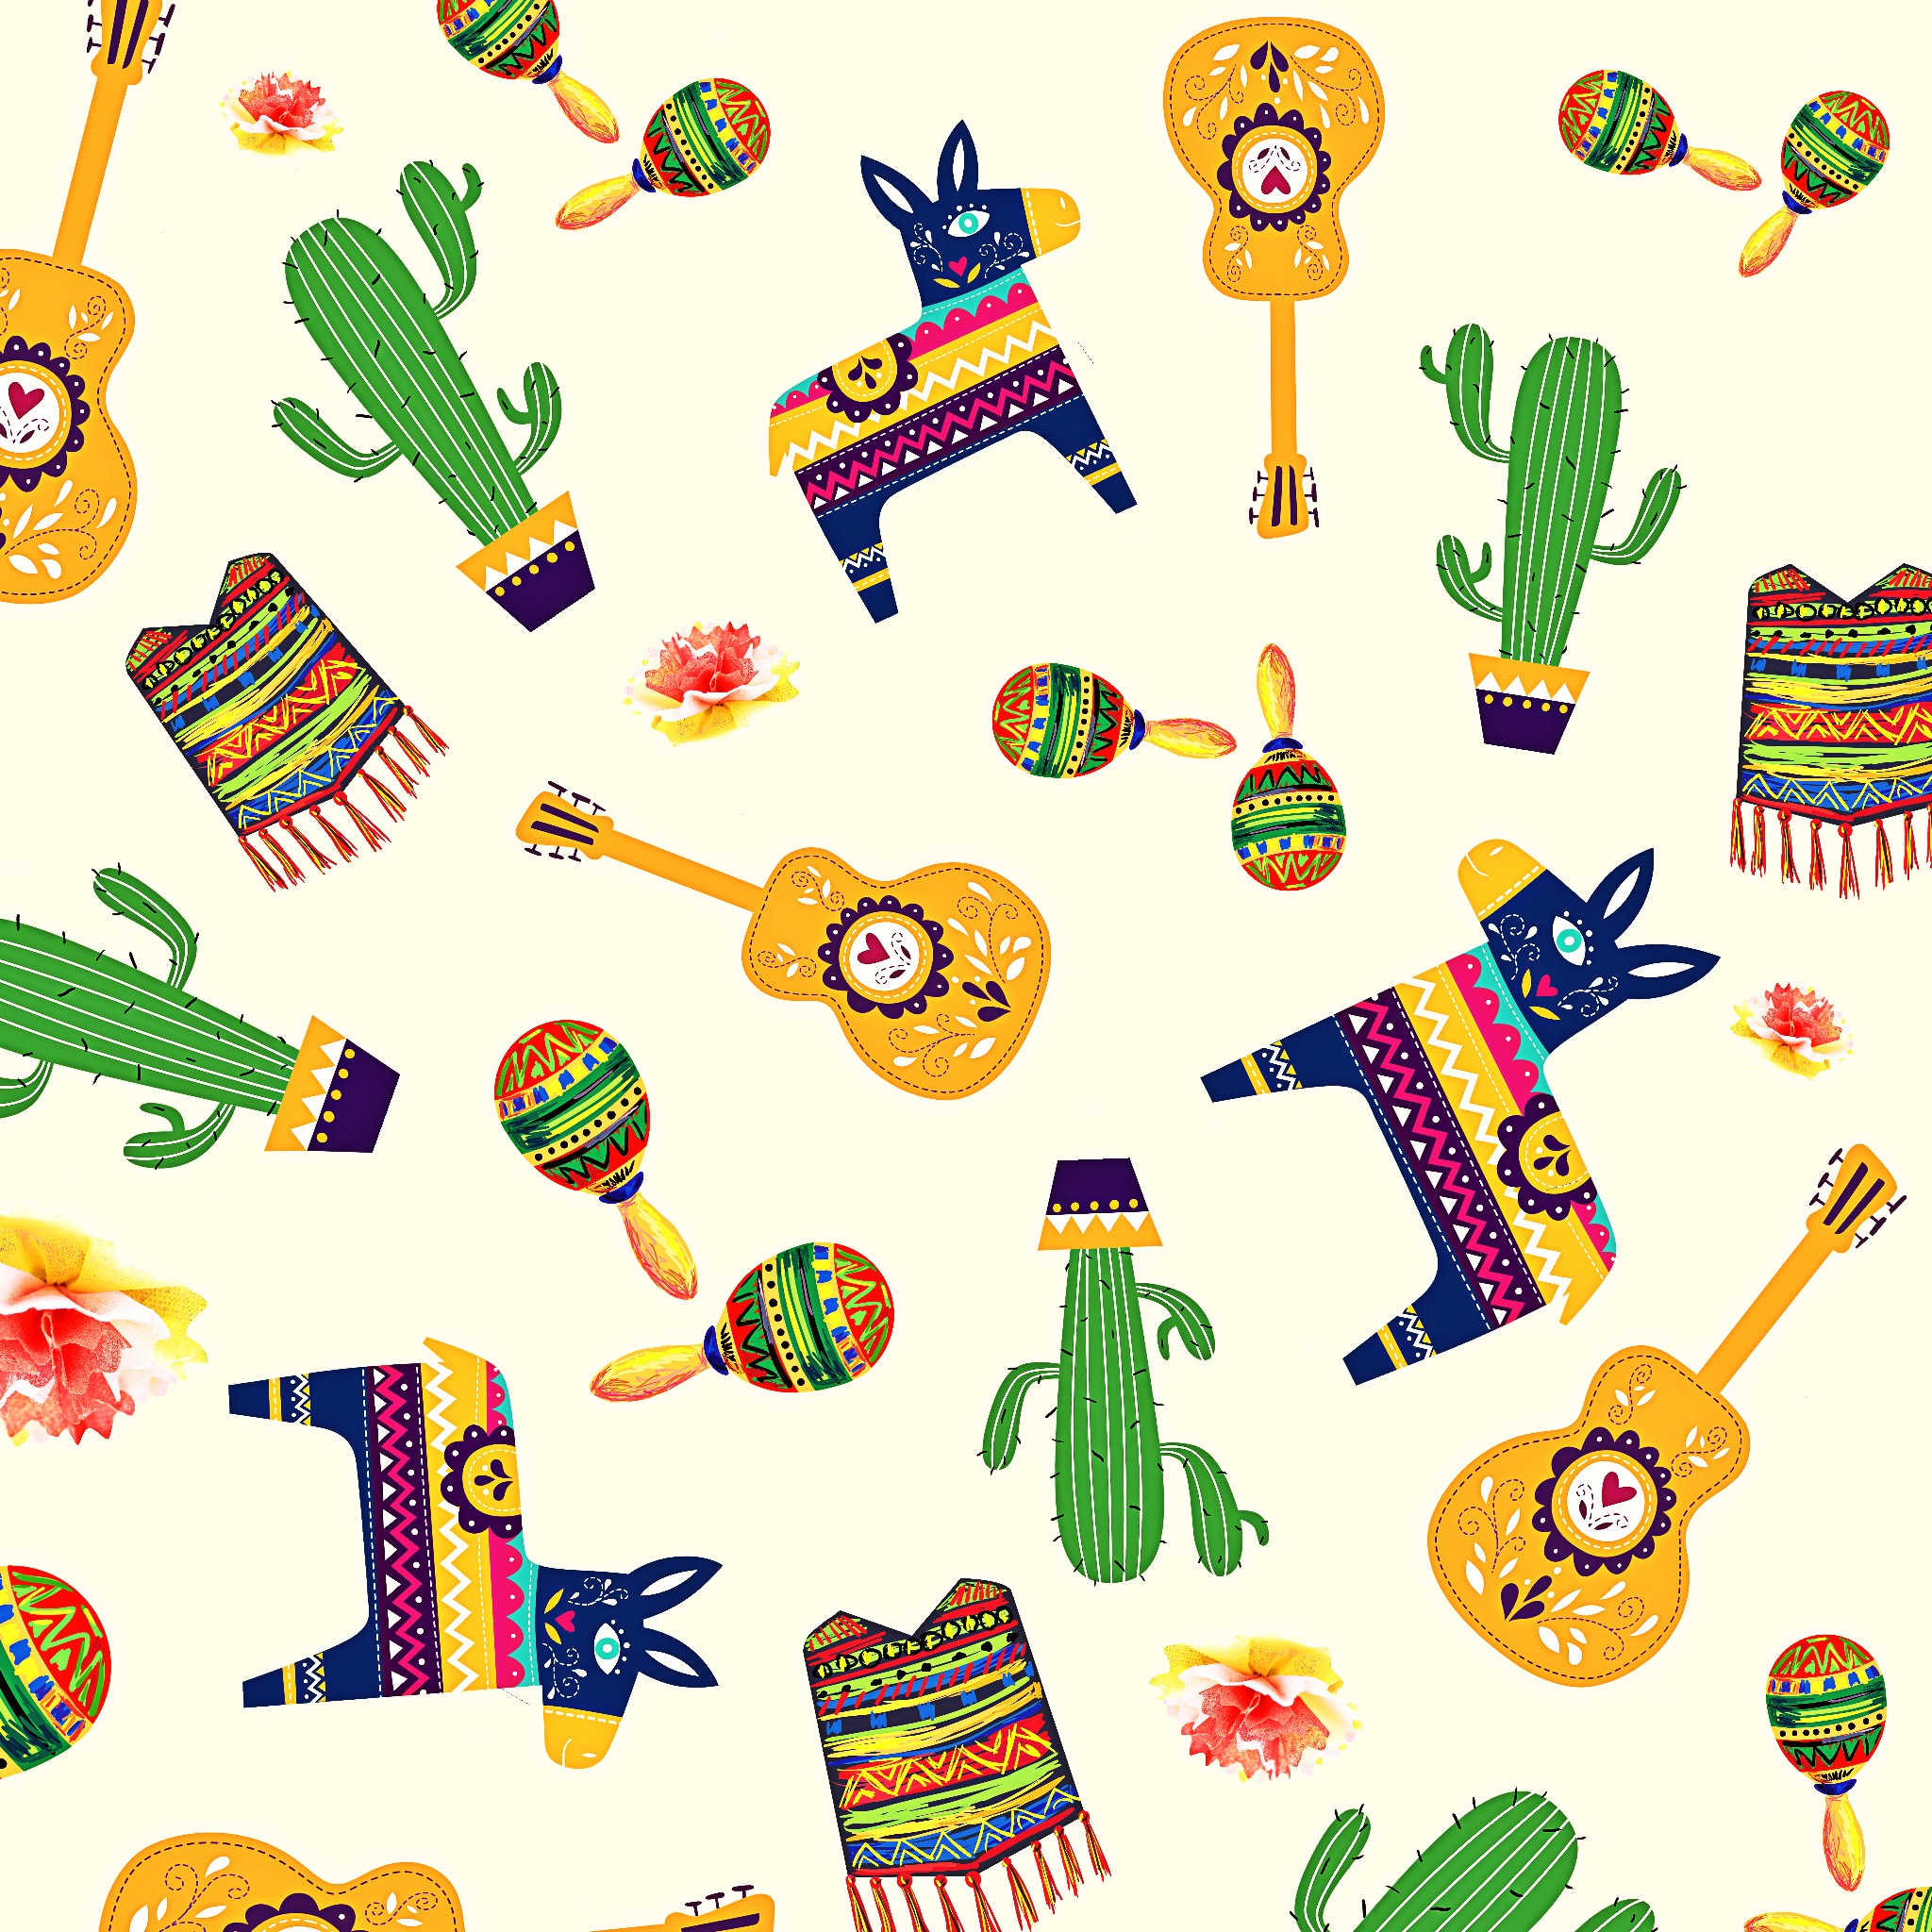 #patterns #cactus #guitar #cincodemayo #patterncontest #picsart #madewithpicsart @picart 